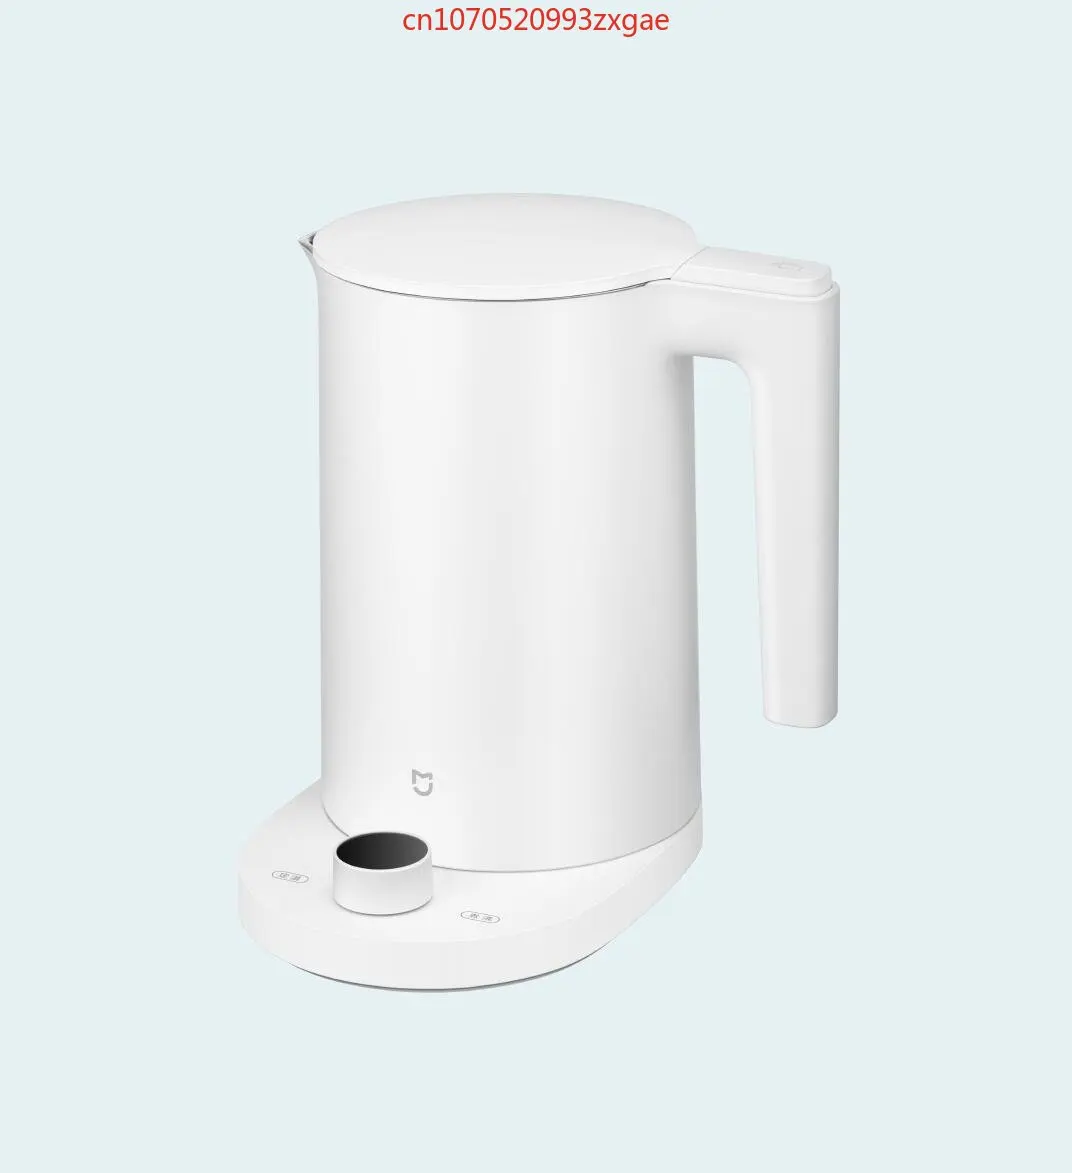 Genuine Xiaomi Mijia thermostatic electric kettle 2Pro, APP intelligent control, LED screen data display Xiaomi electric kettle enlarge